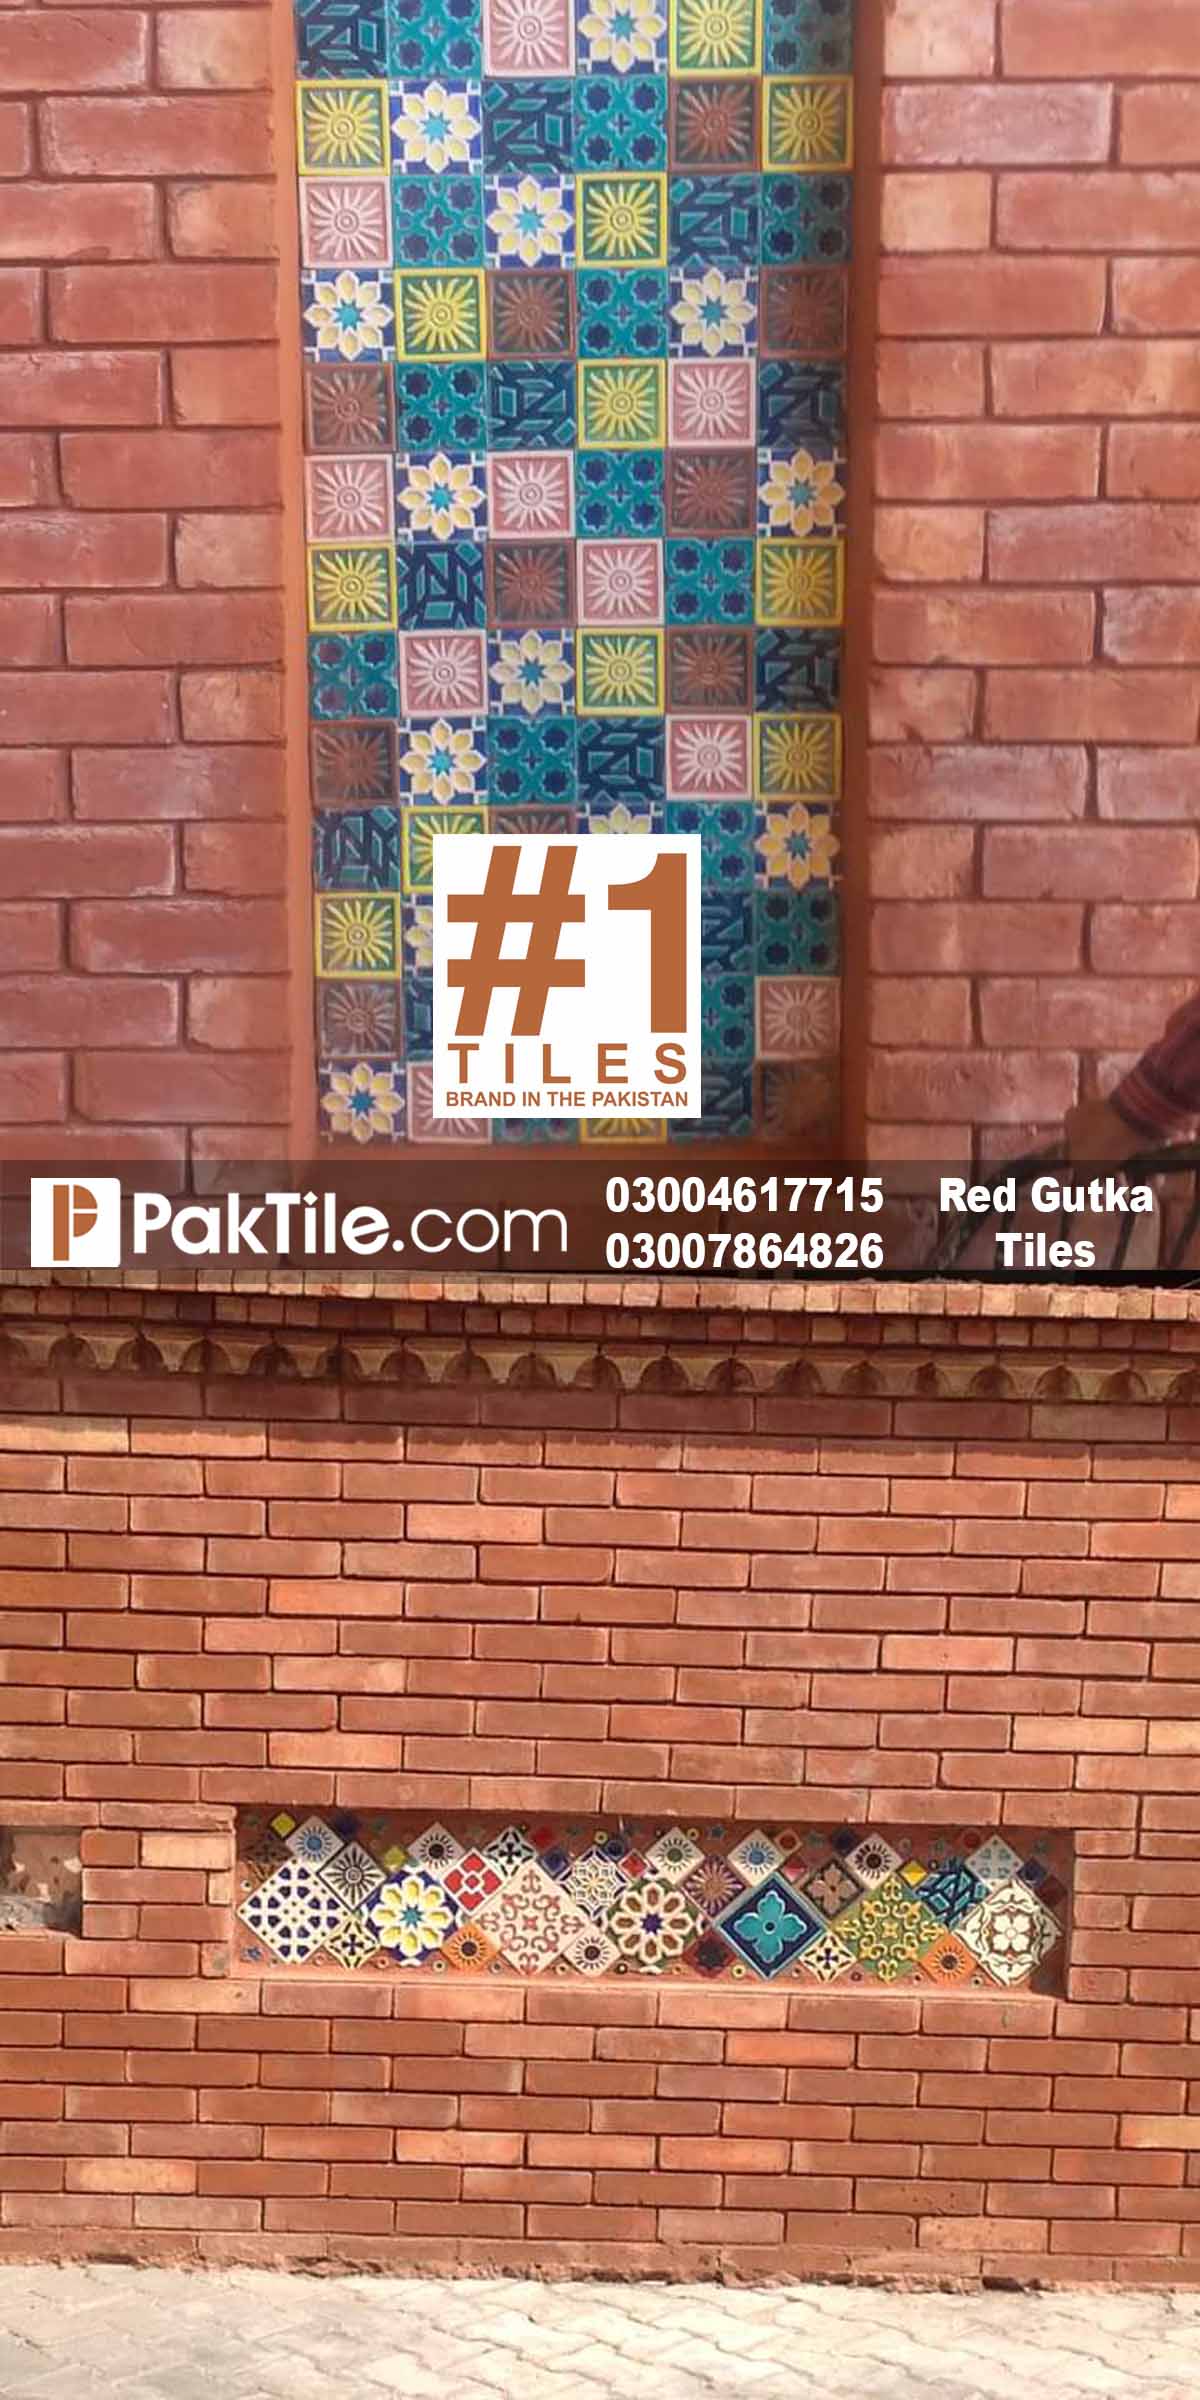 Gutka tiles price in pakistan